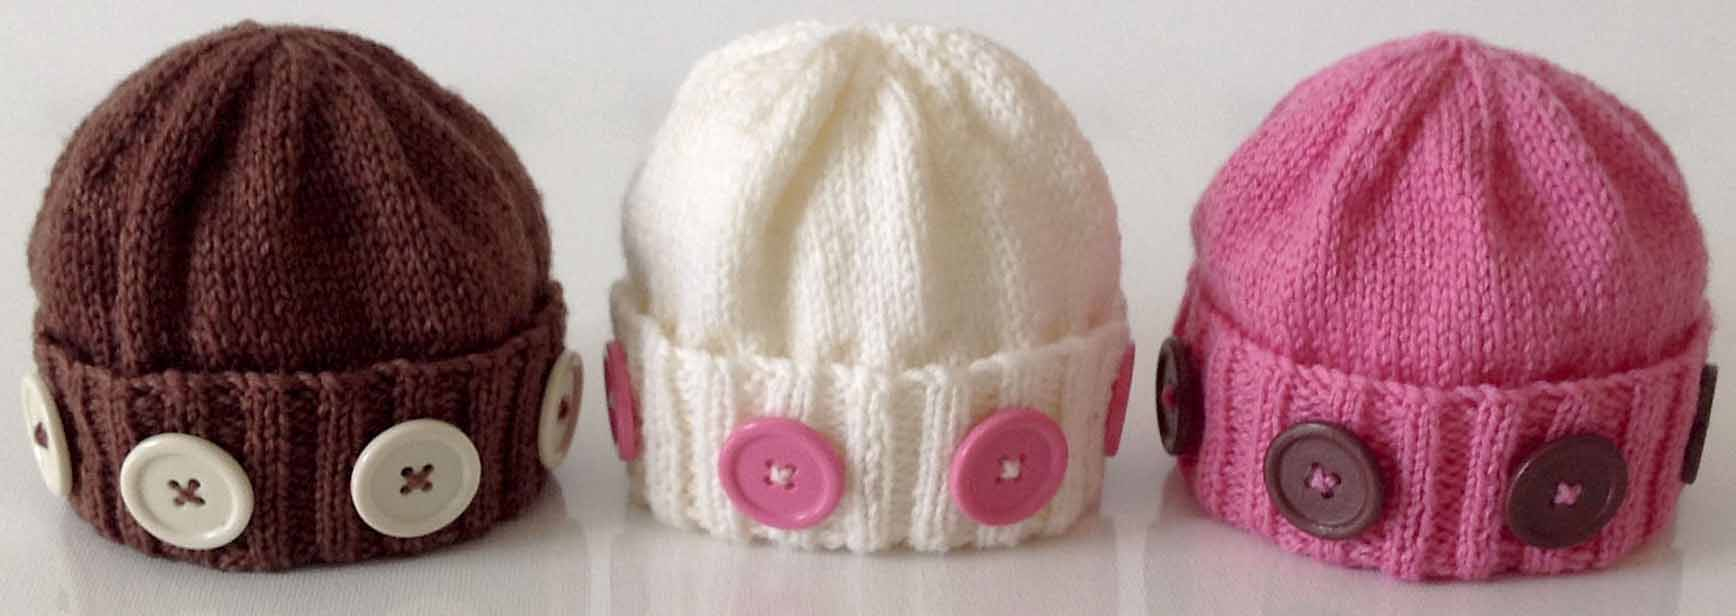 Premature Baby Knitting Patterns Free Premature Ba Hats Knitting Patterns